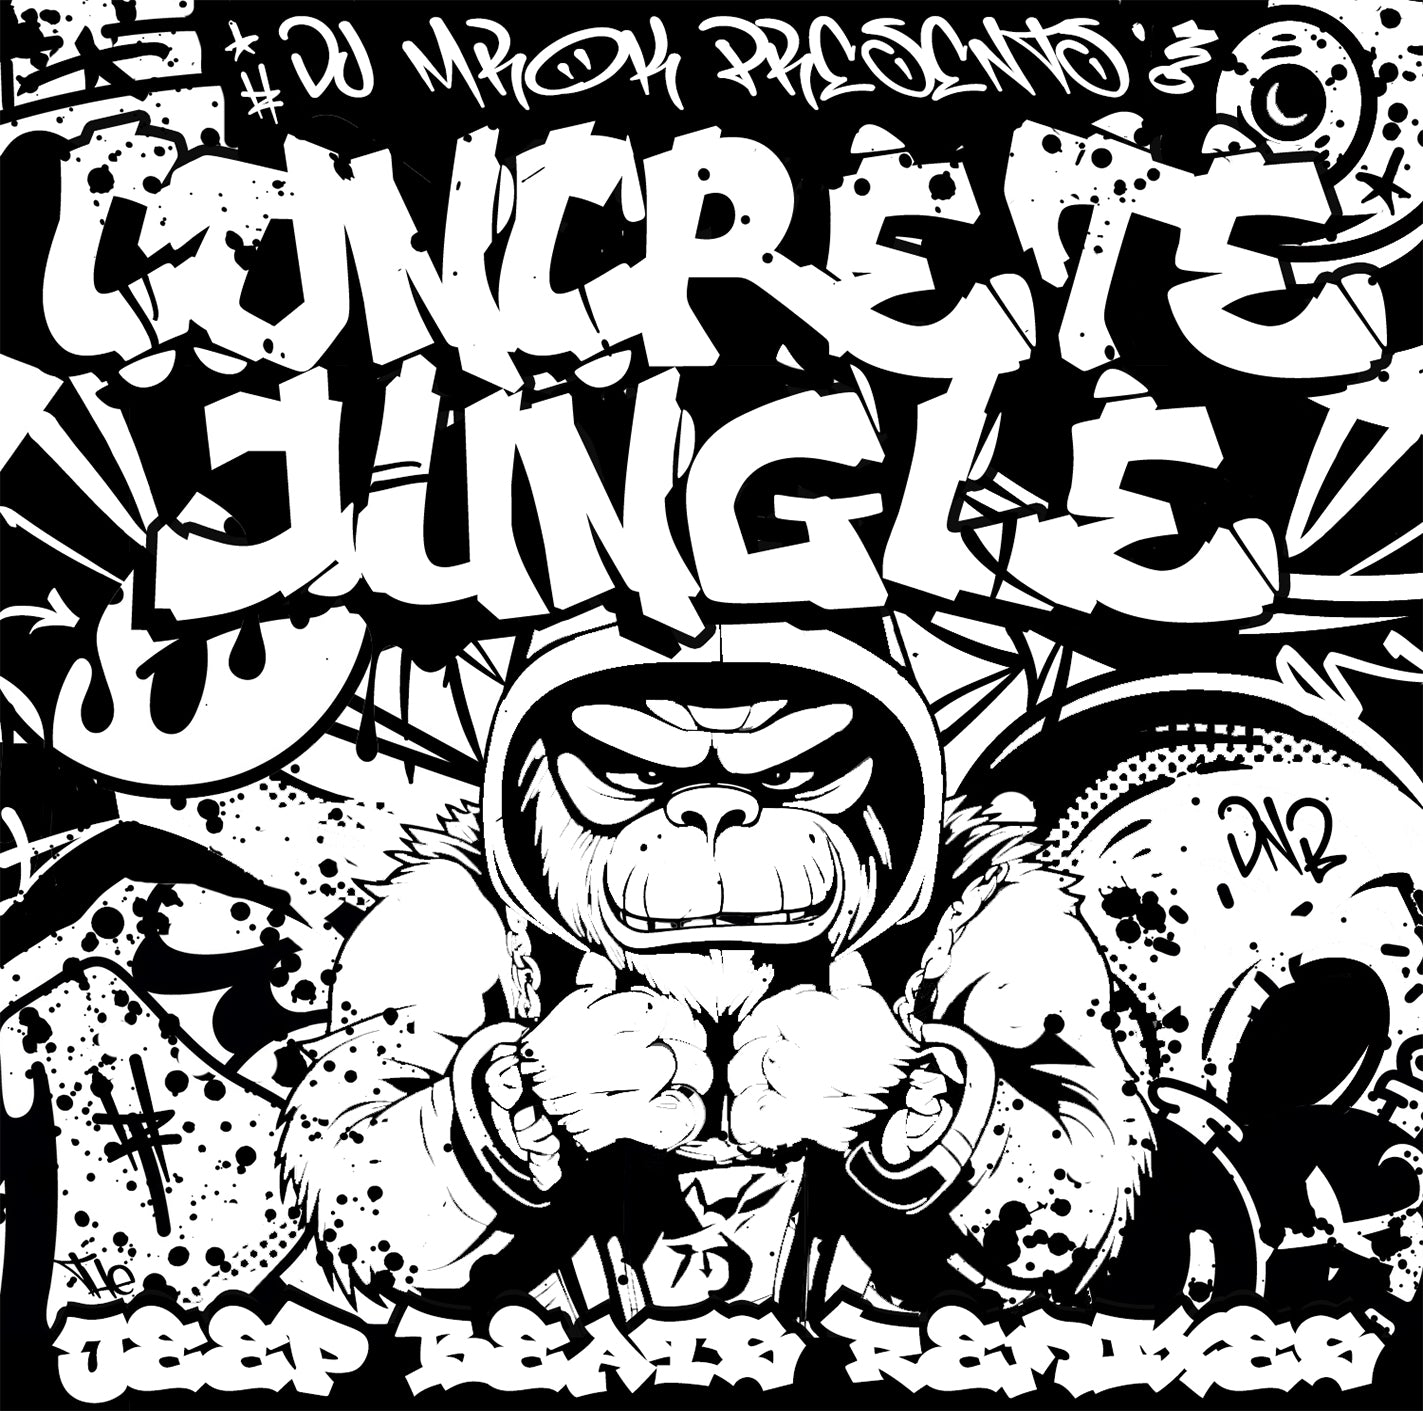 DJ MROK - Concrete Jungle: The Jeep Beats Remixes